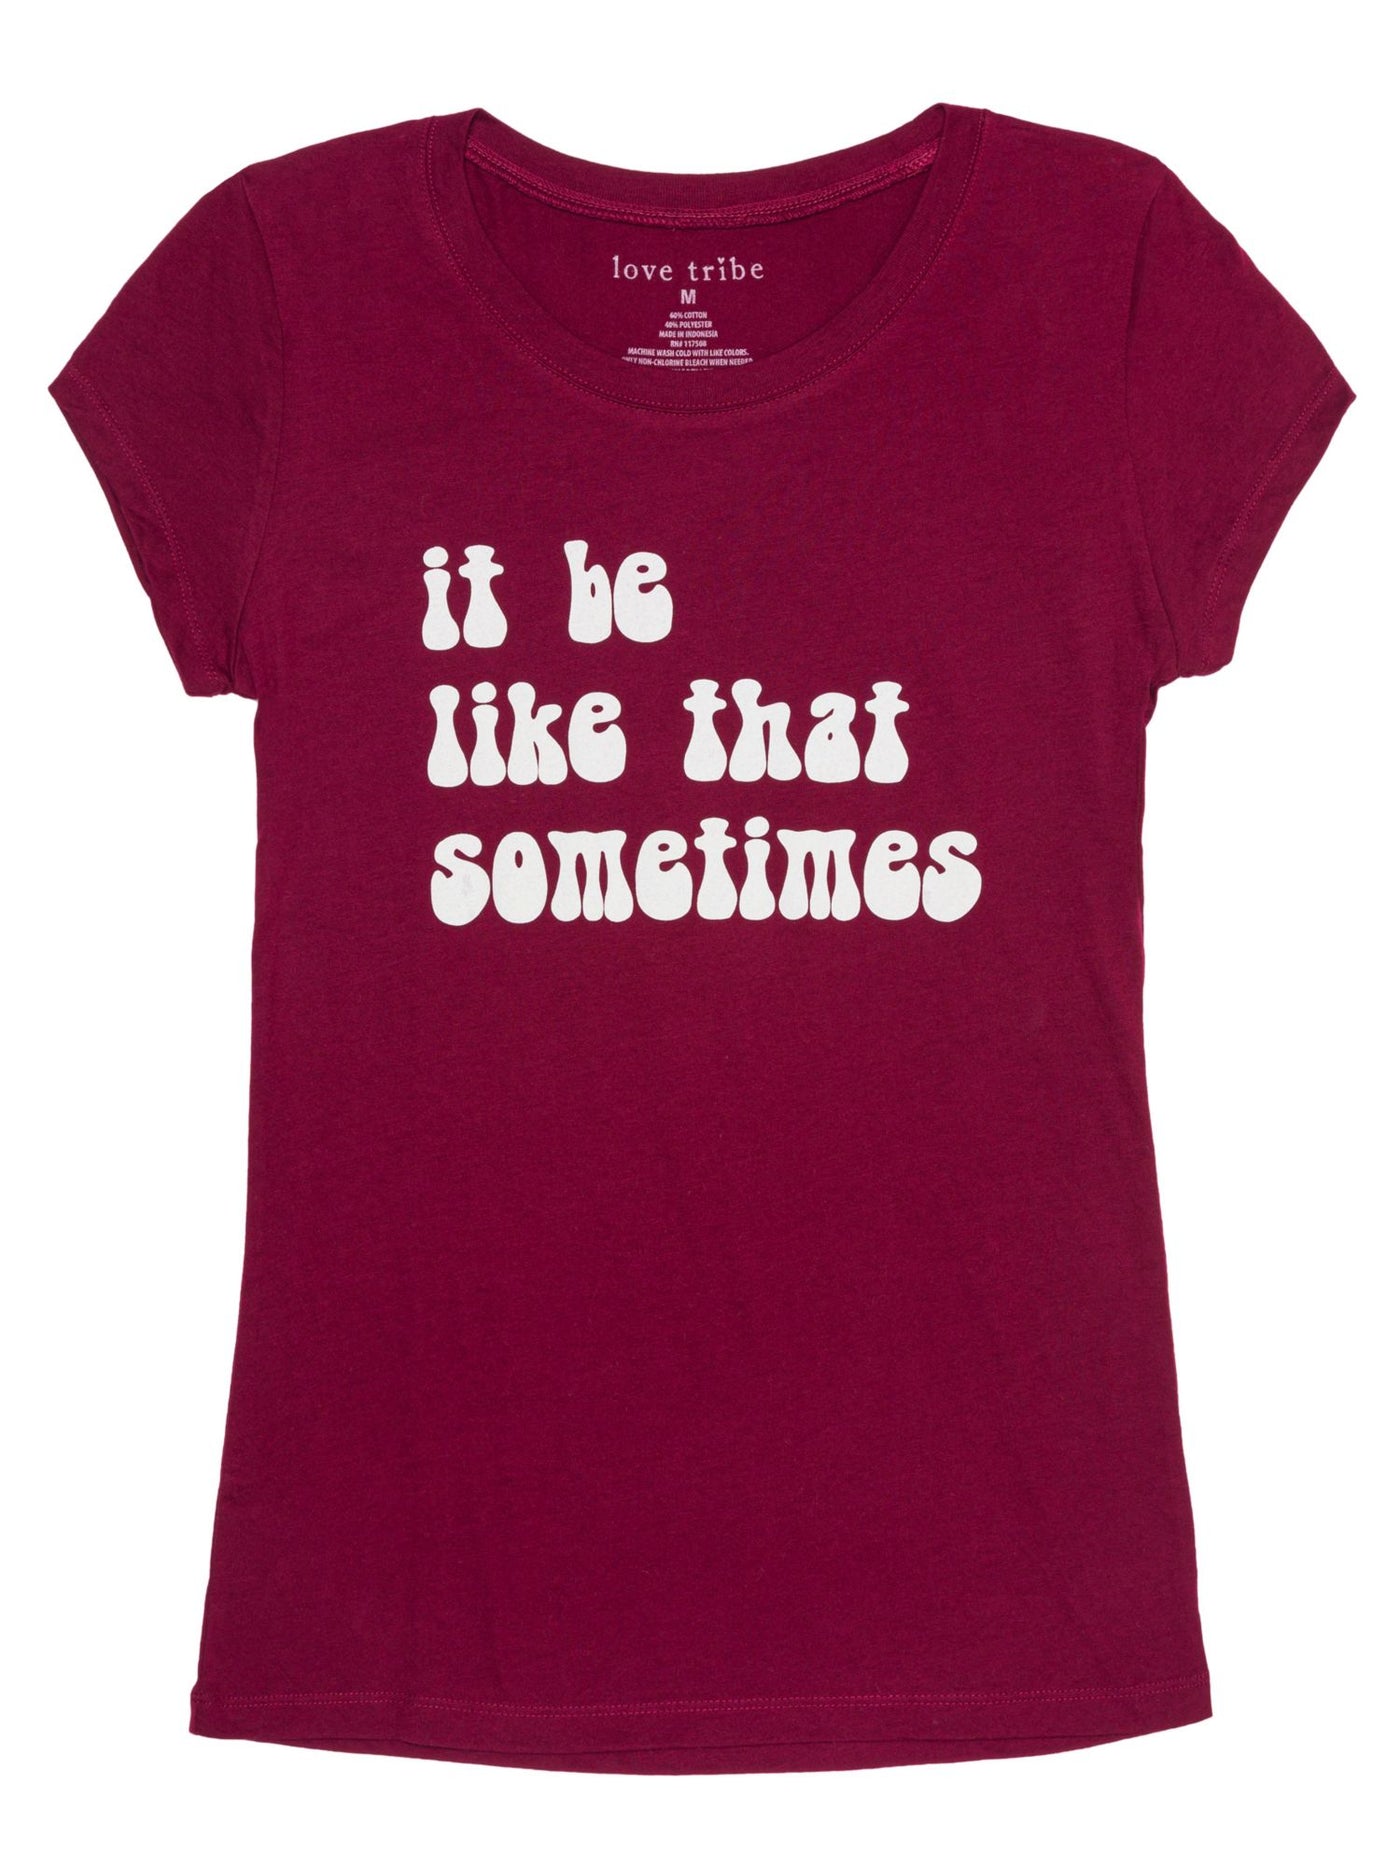 LOVE TRIBE Womens Burgundy Printed Short Sleeve Crew Neck T-Shirt Size: L